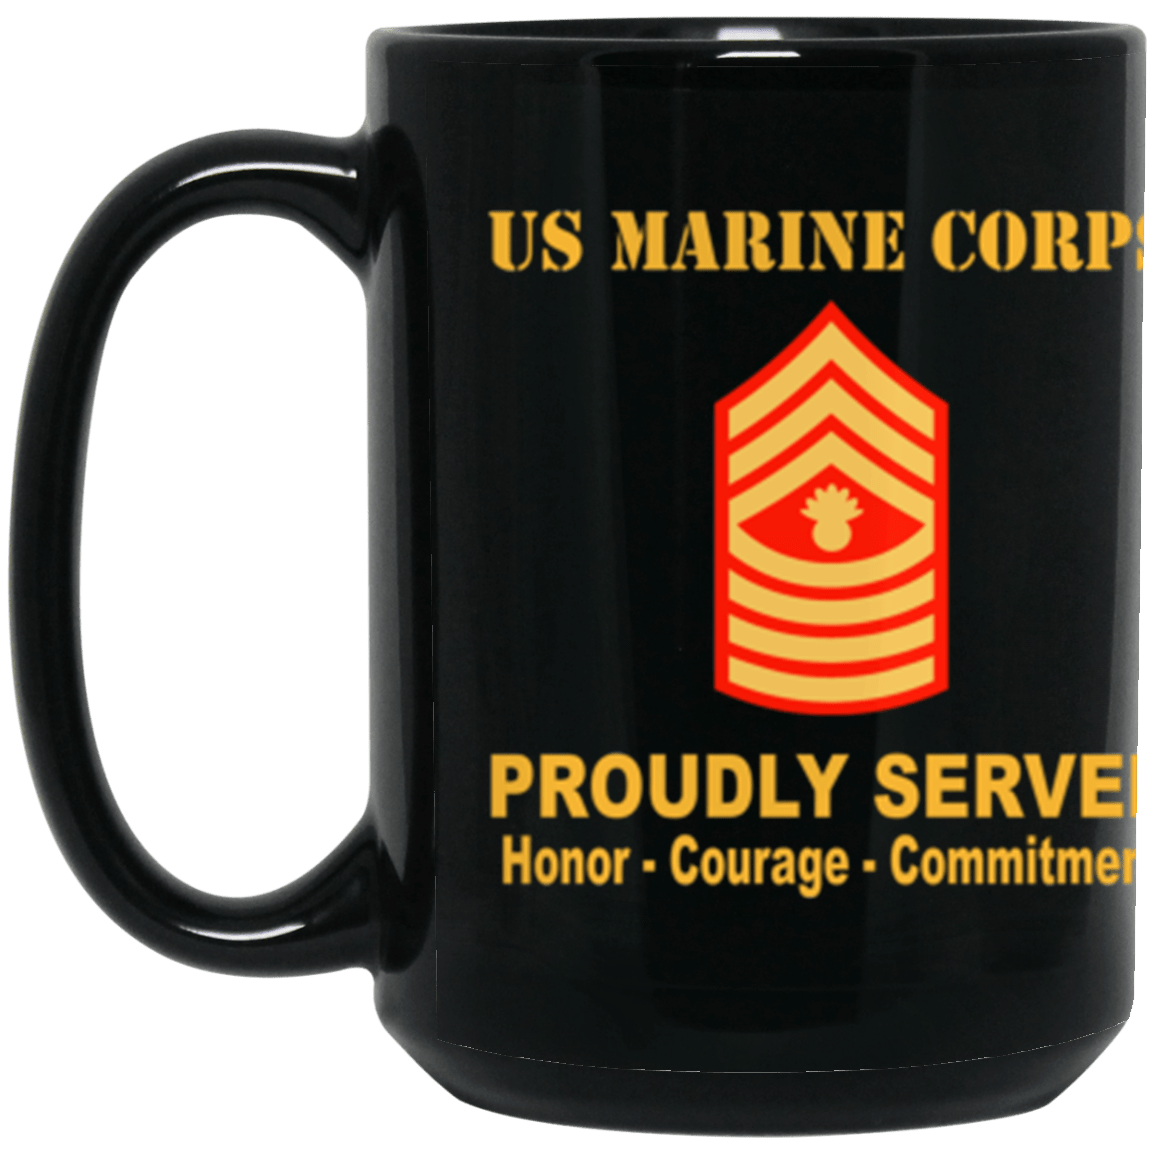 USMC E-9 Master Gunnery Sergeant E9 MGySg Staff Noncommissioned Officer Ranks Proudly Served Core Values 15 oz. Black Mug-Drinkware-Veterans Nation